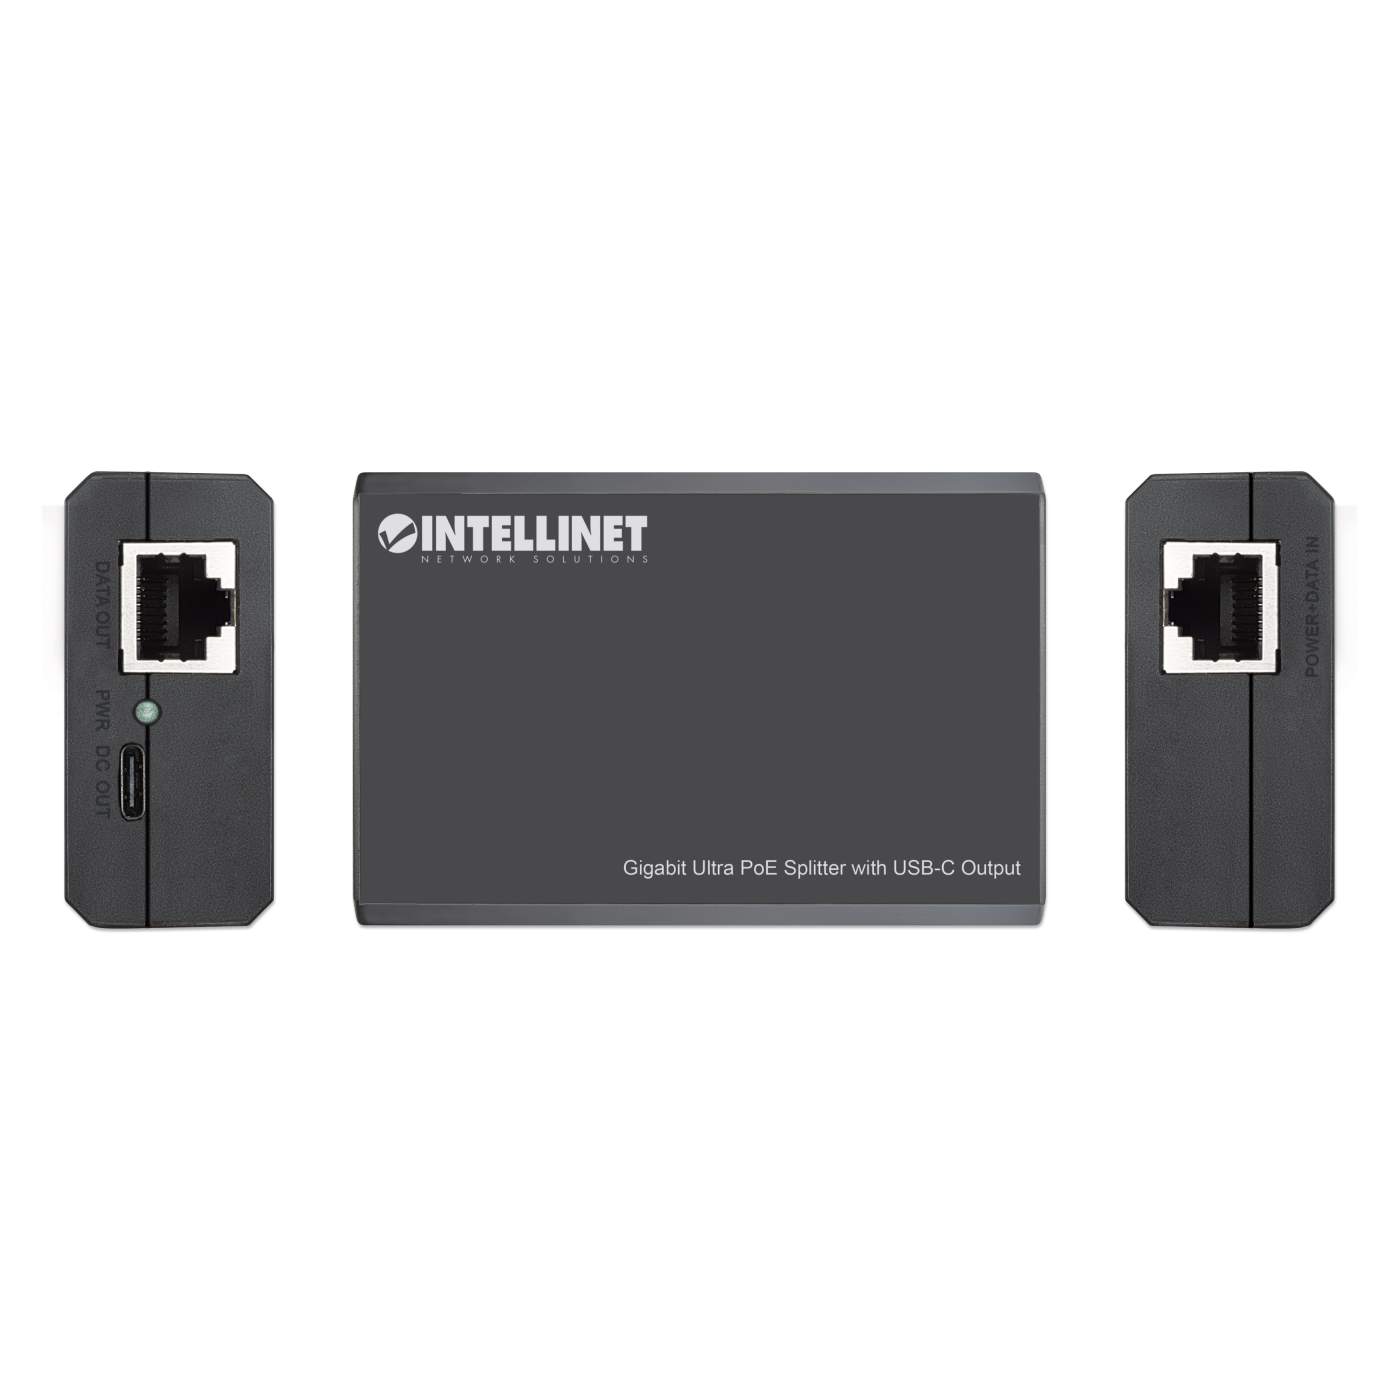 Gigabit Ultra PoE Splitter with USB-C Output Image 6